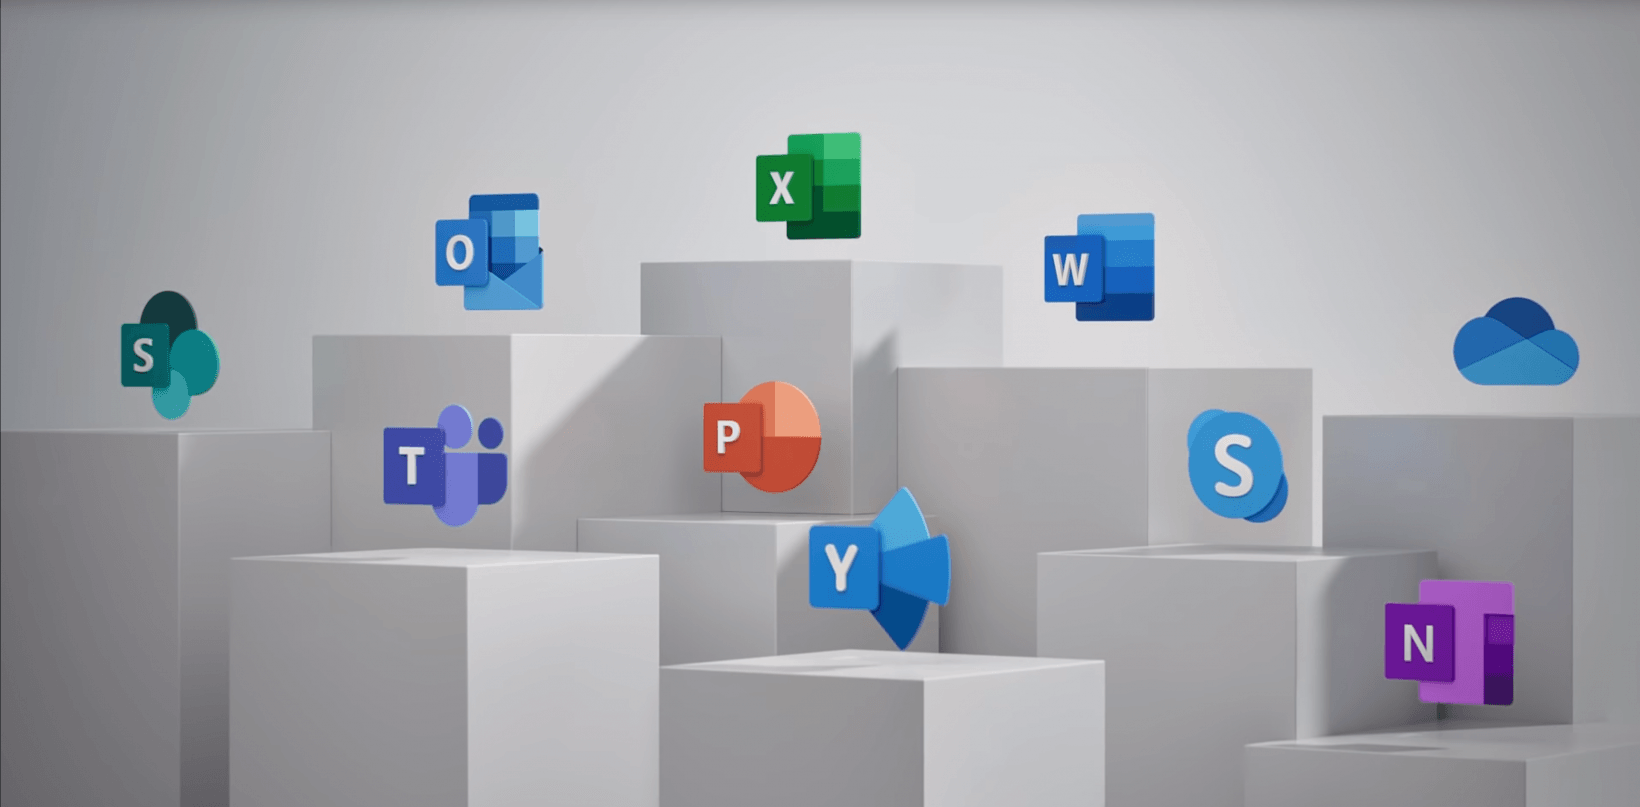 Microsoft Product Logo - Microsoft's new Office logos are a beautiful glimpse of the future